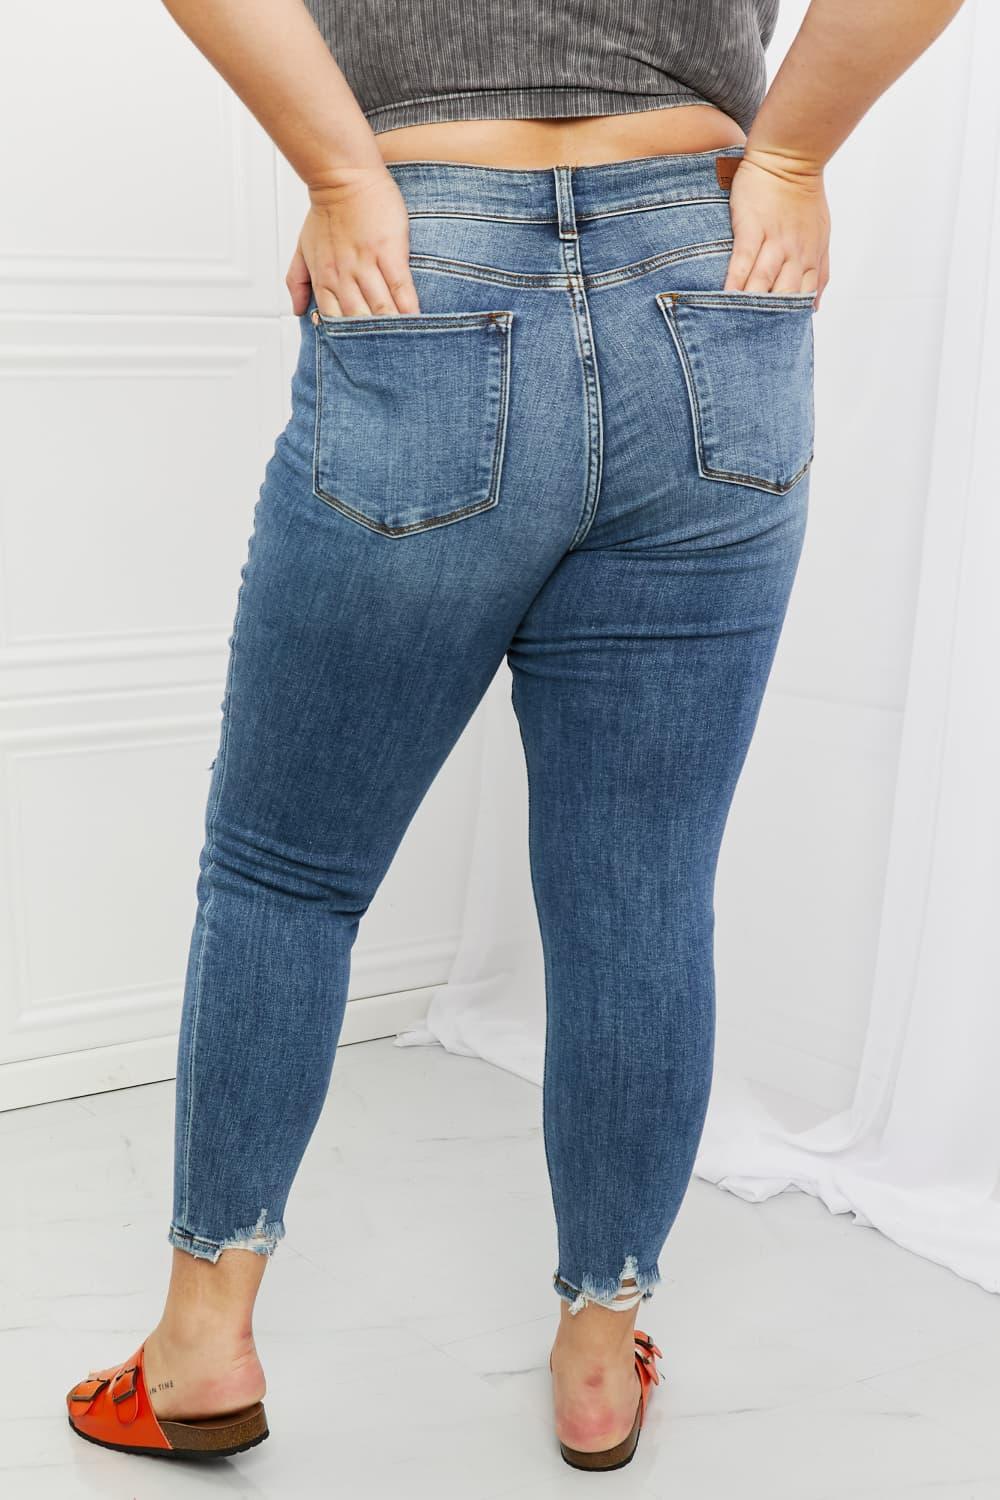 Take Pride Skinny Distressed Plus Size Patch Jeans - MXSTUDIO.COM